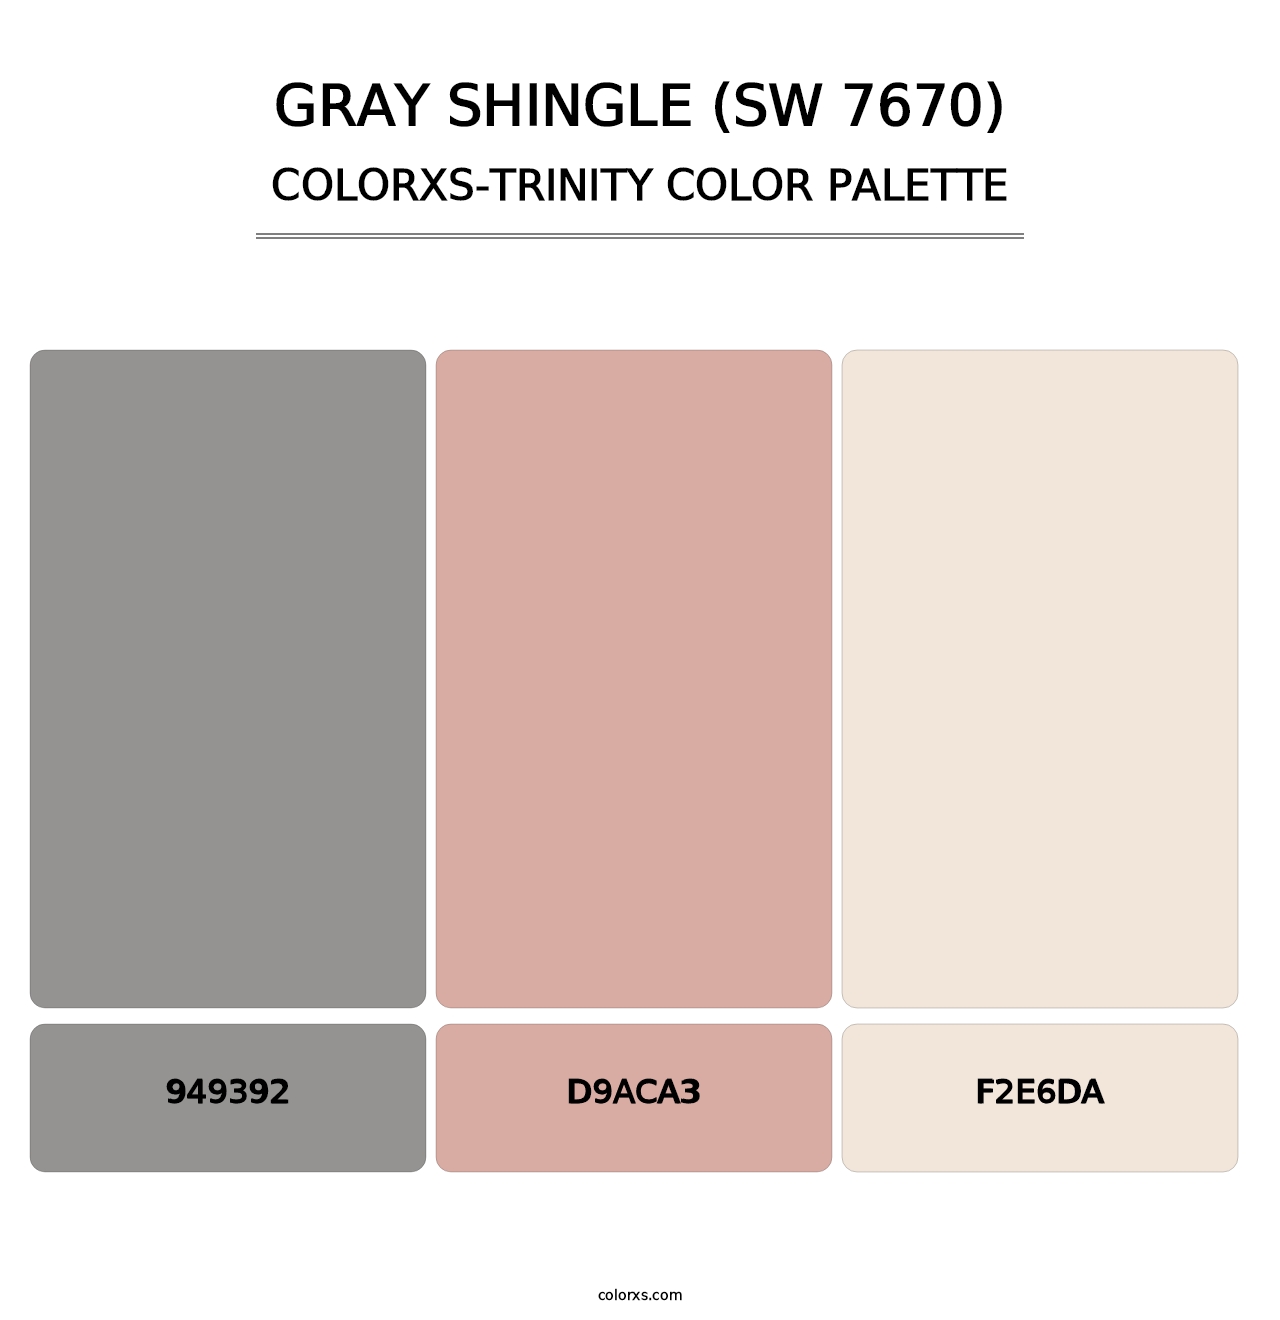 Gray Shingle (SW 7670) - Colorxs Trinity Palette